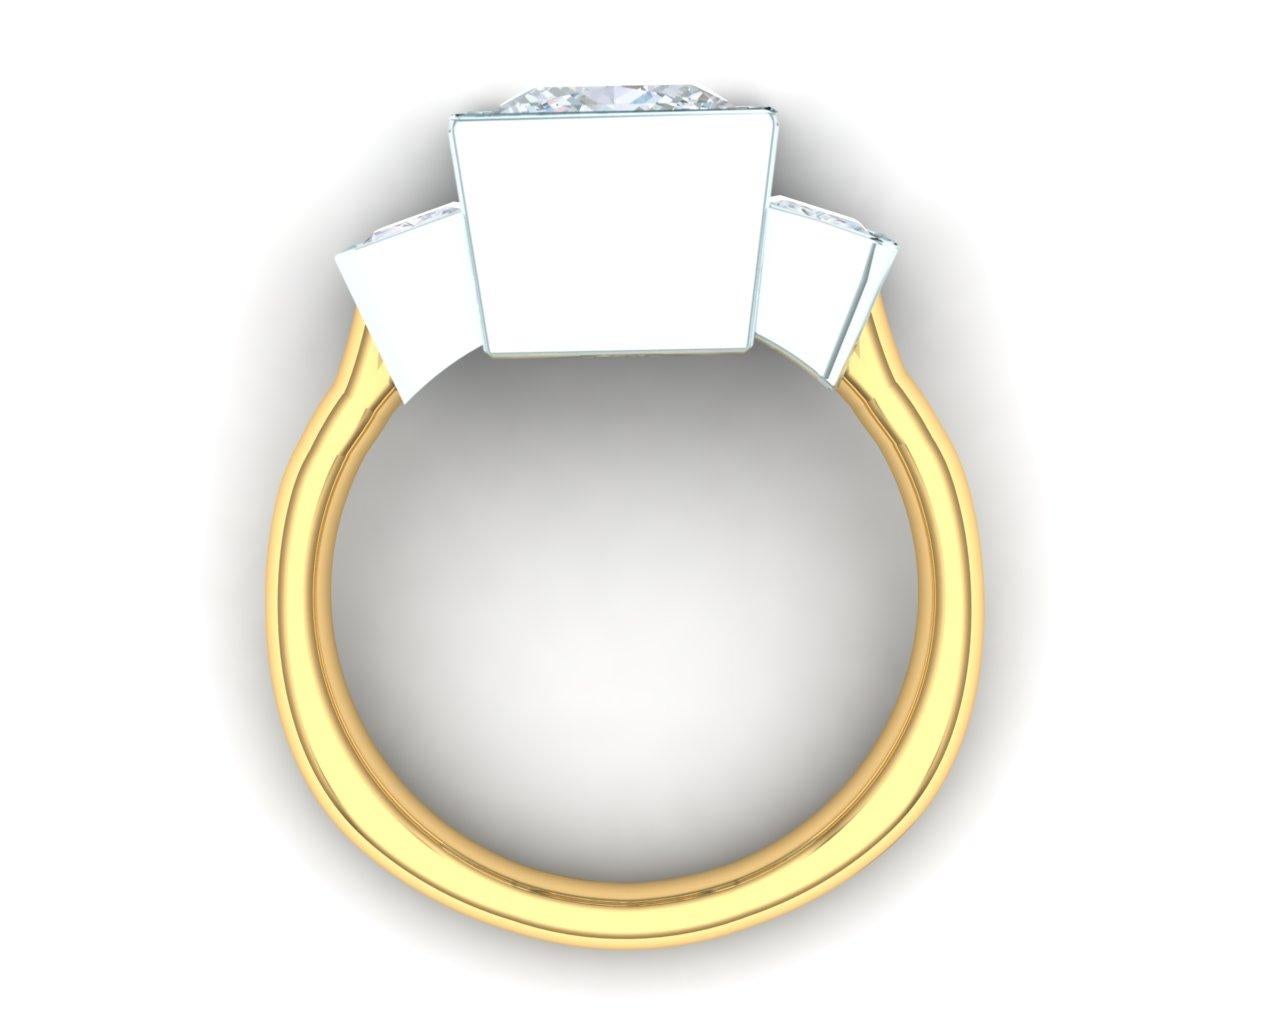 4 carat princess cut diamond ring